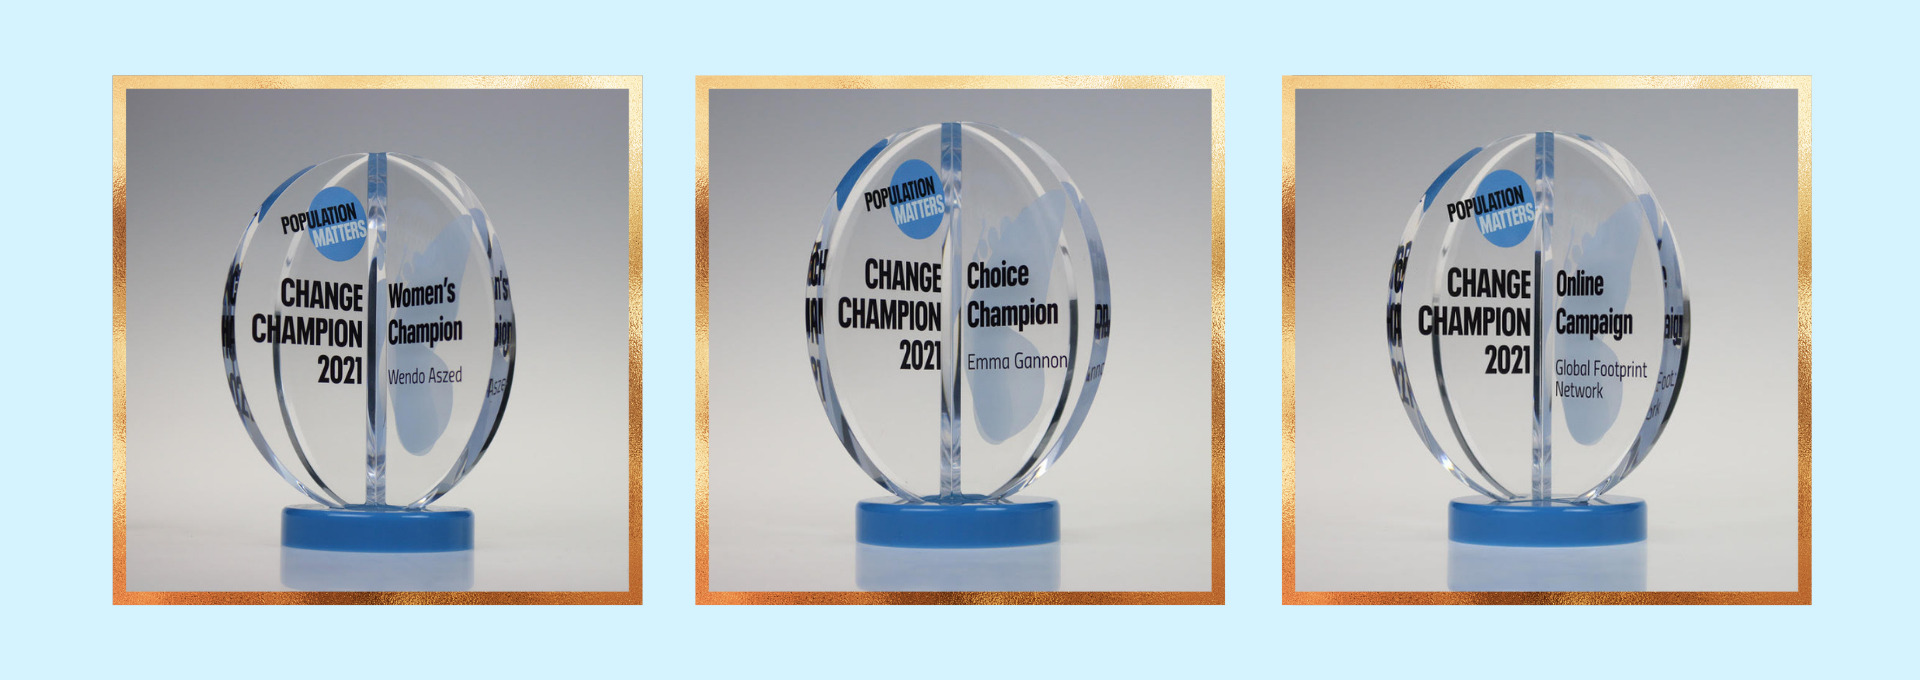 Change Champions banner